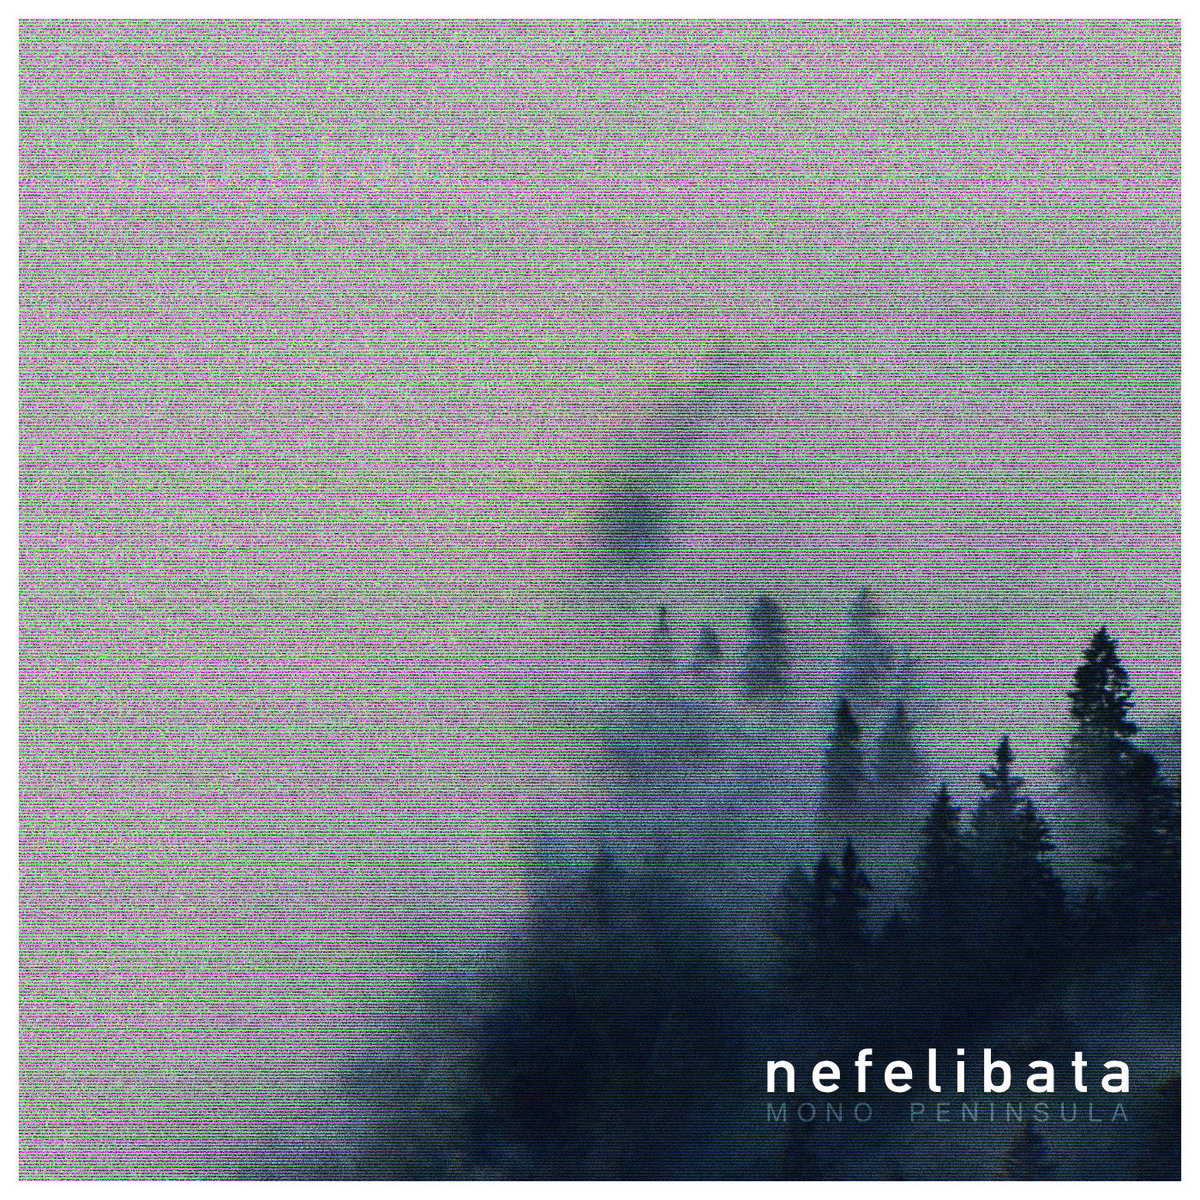 Nefelibata: Cloud-Walker Someone Who Dwells In The Clouds